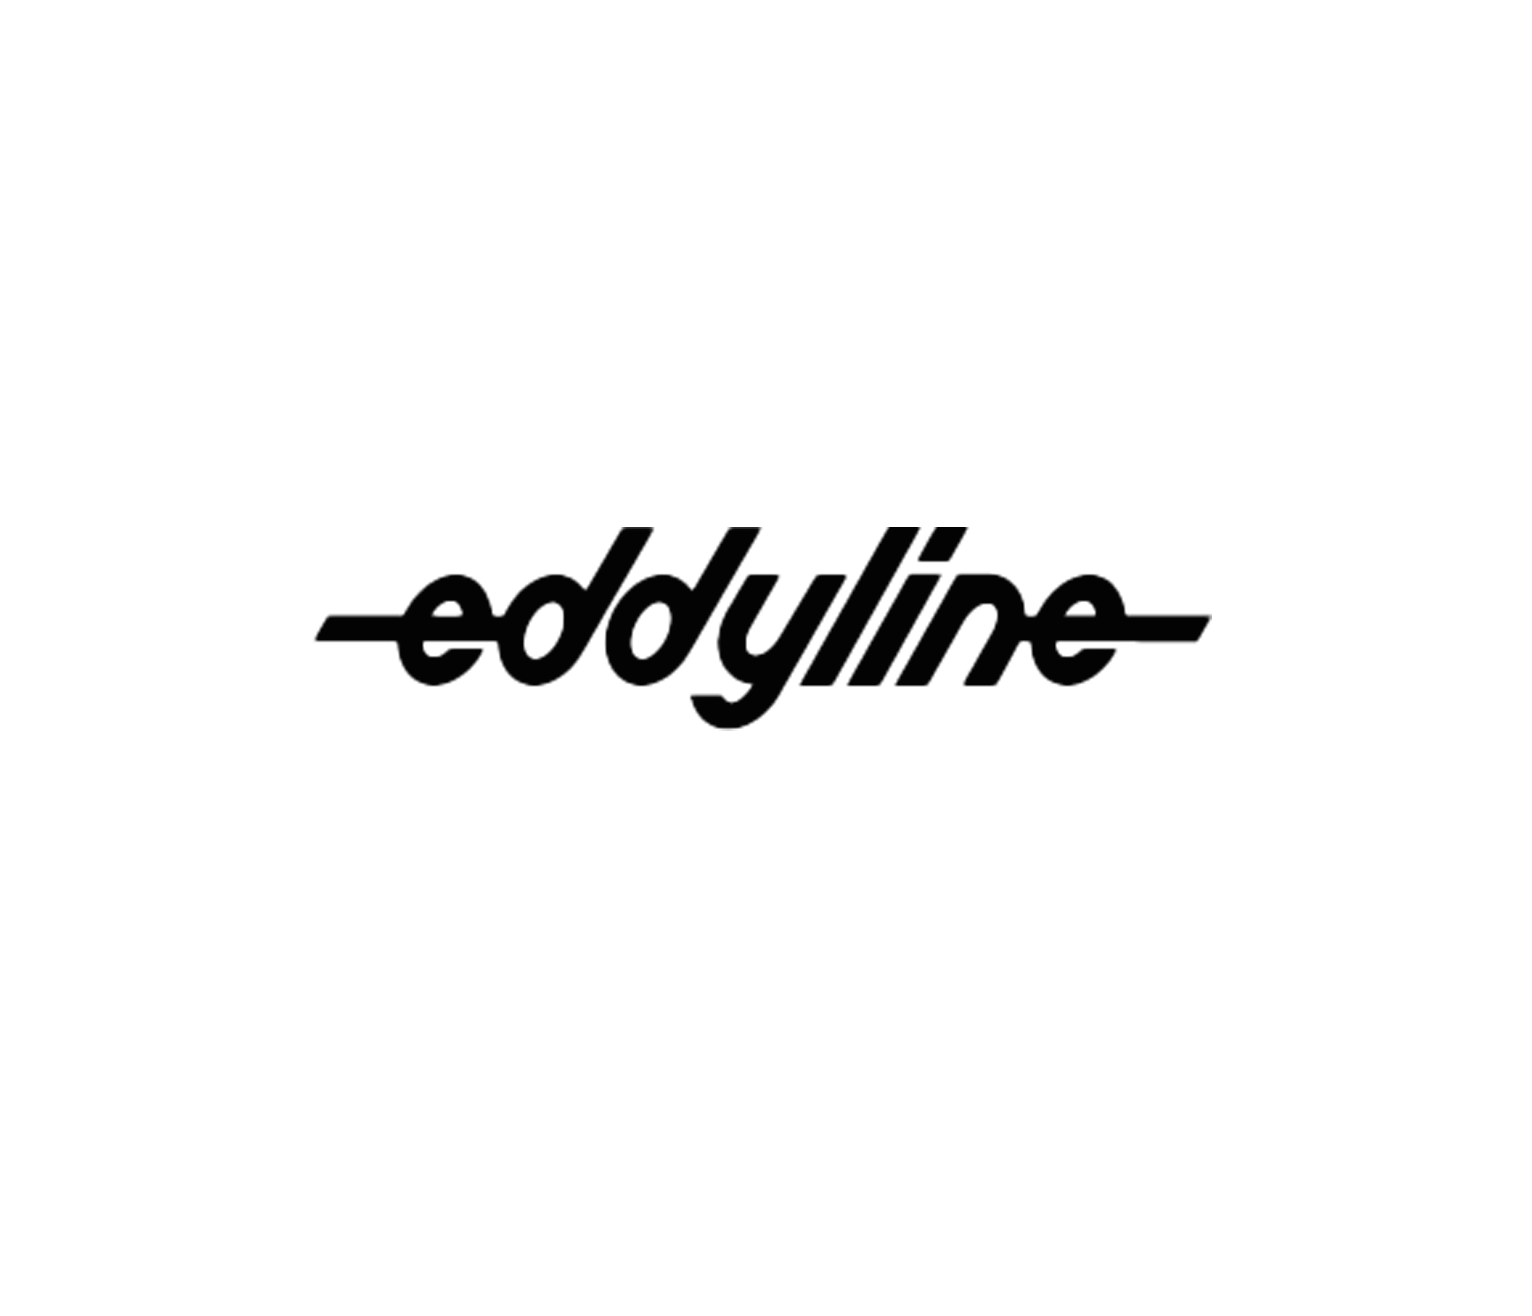 Press Release: Eddyline Kayaks Hires New Sales Representatives in Northeast US